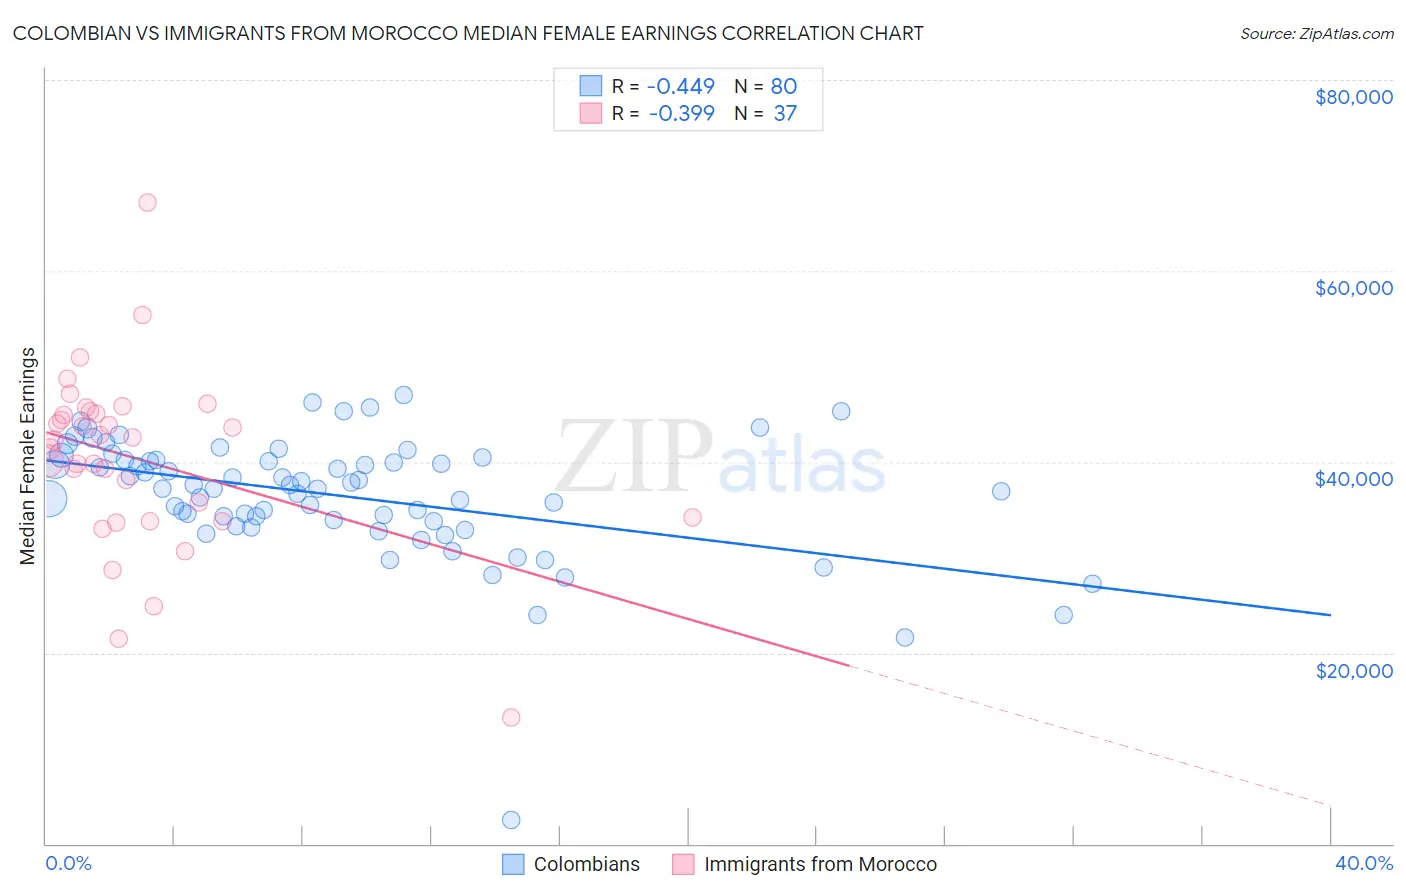 Colombian vs Immigrants from Morocco Median Female Earnings